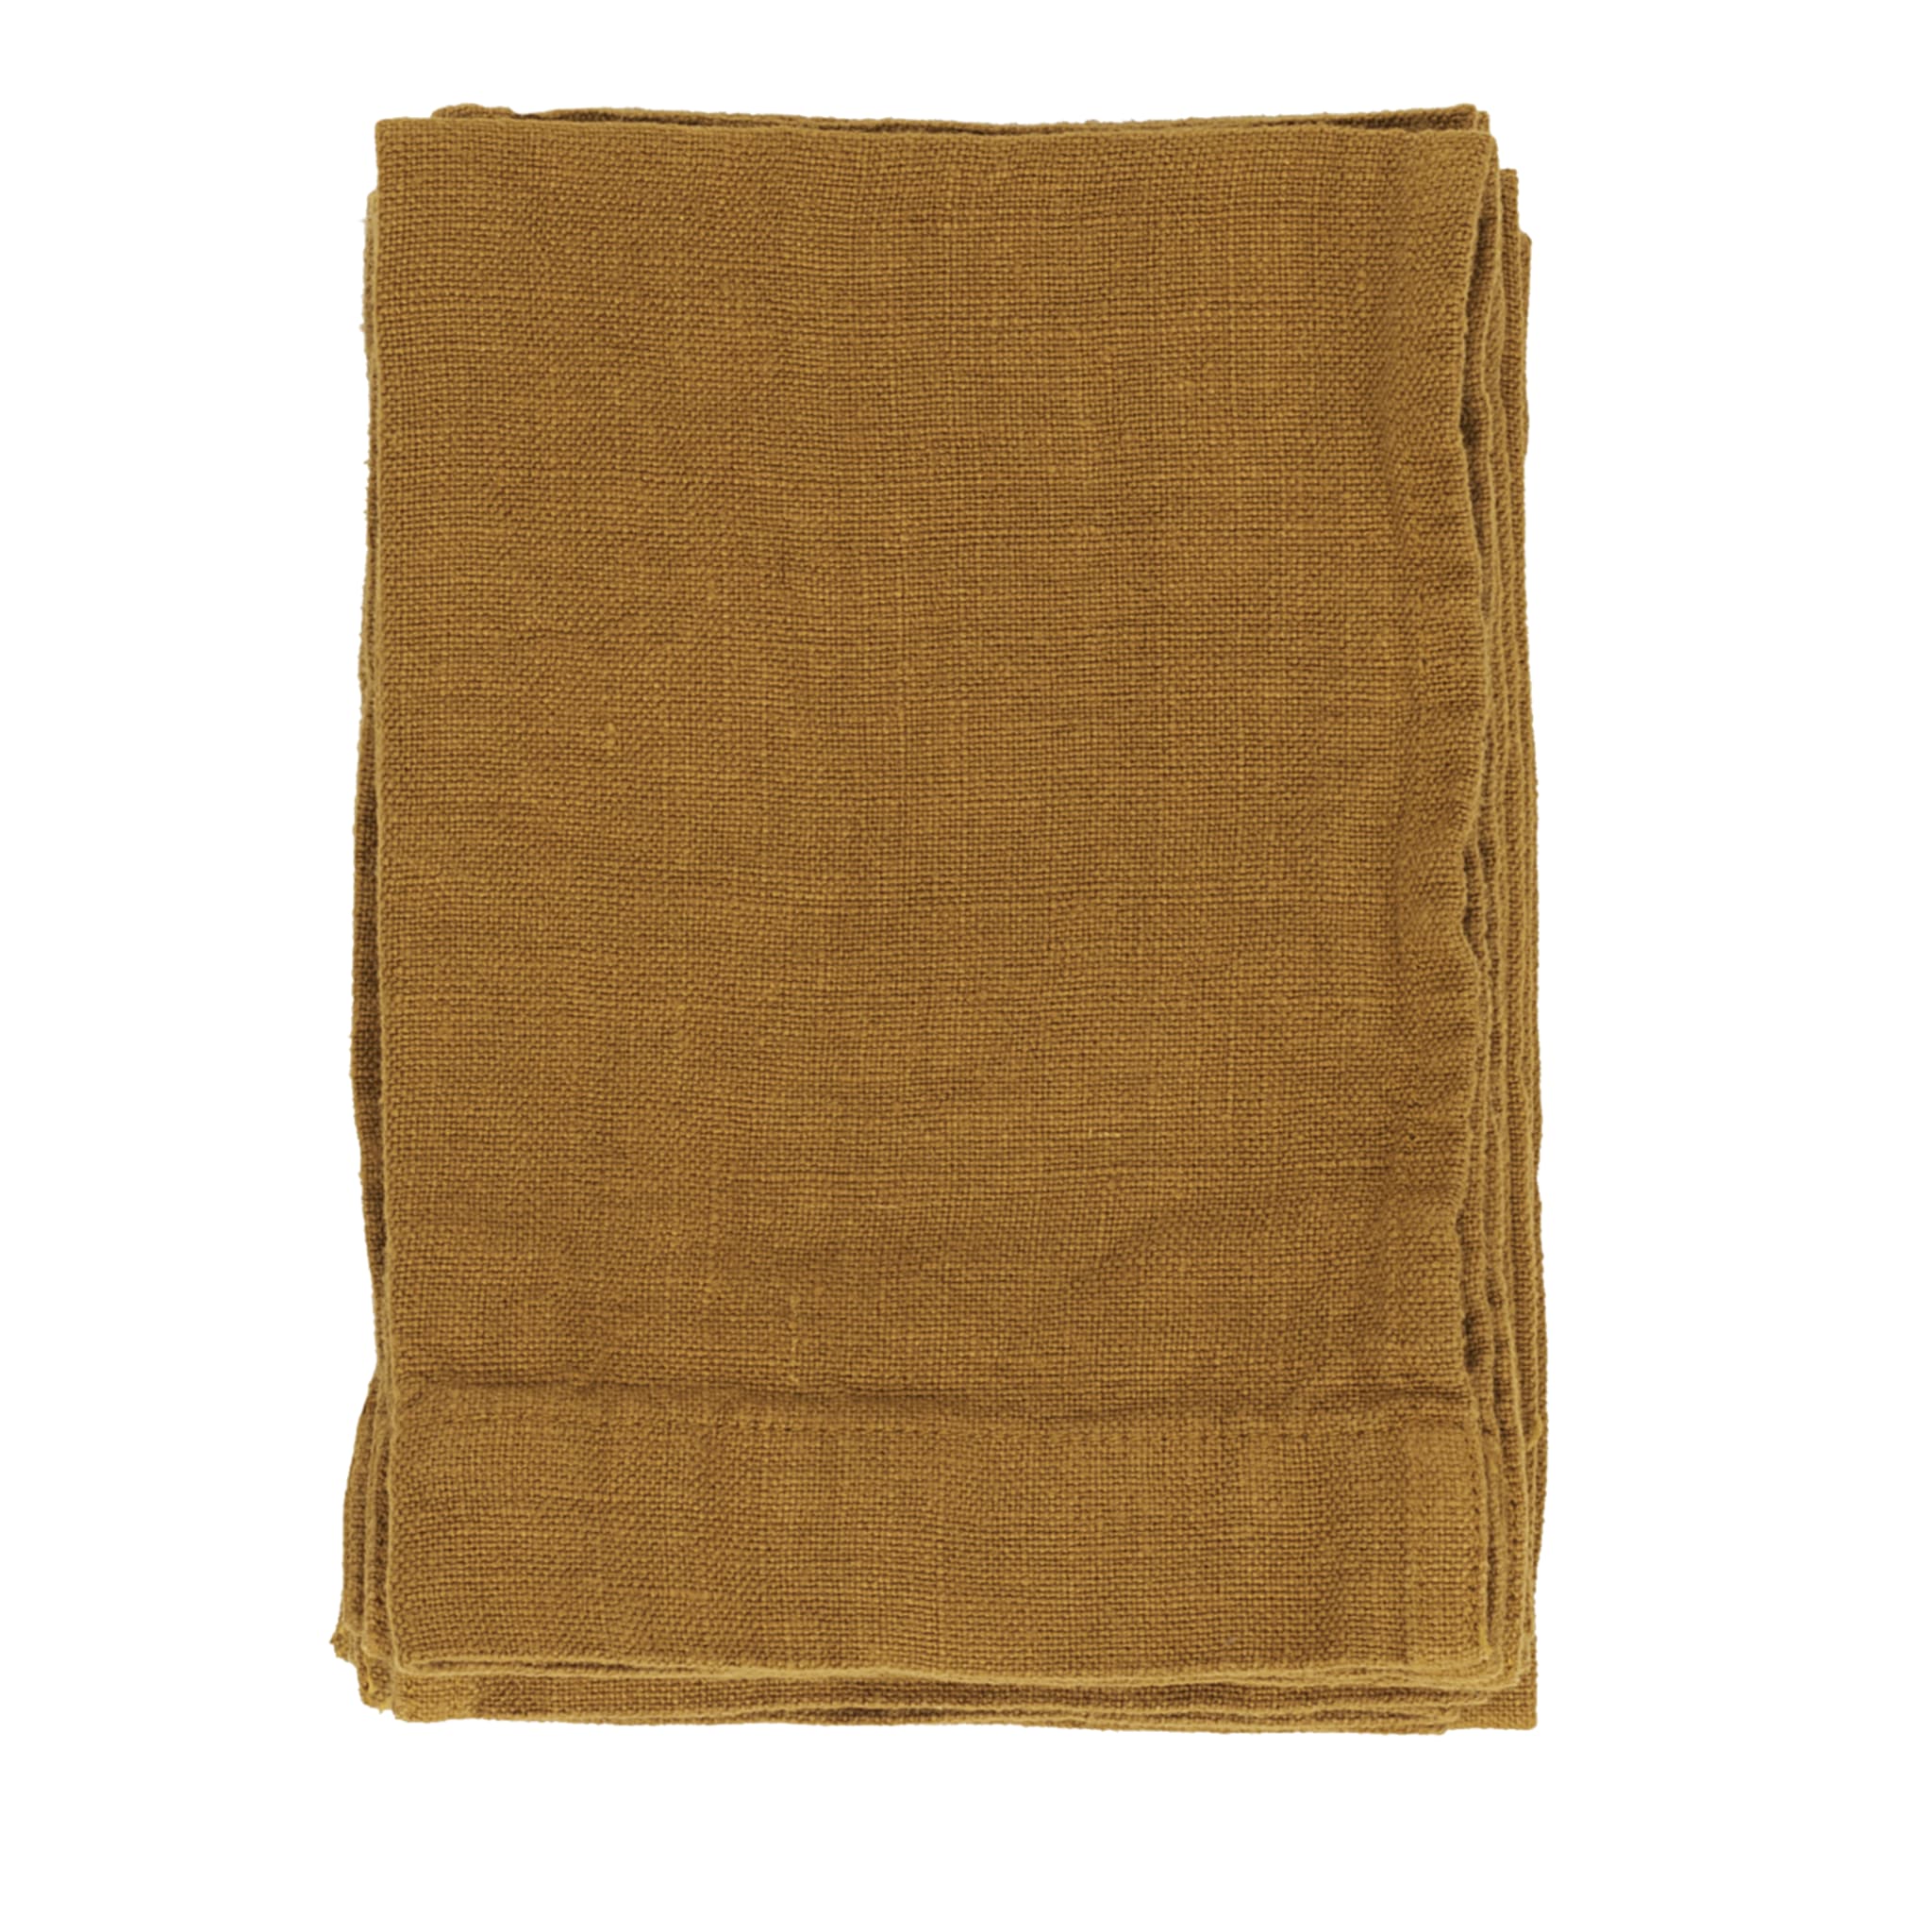 Set of 4 Mustard Linen Hand Towels - Main view